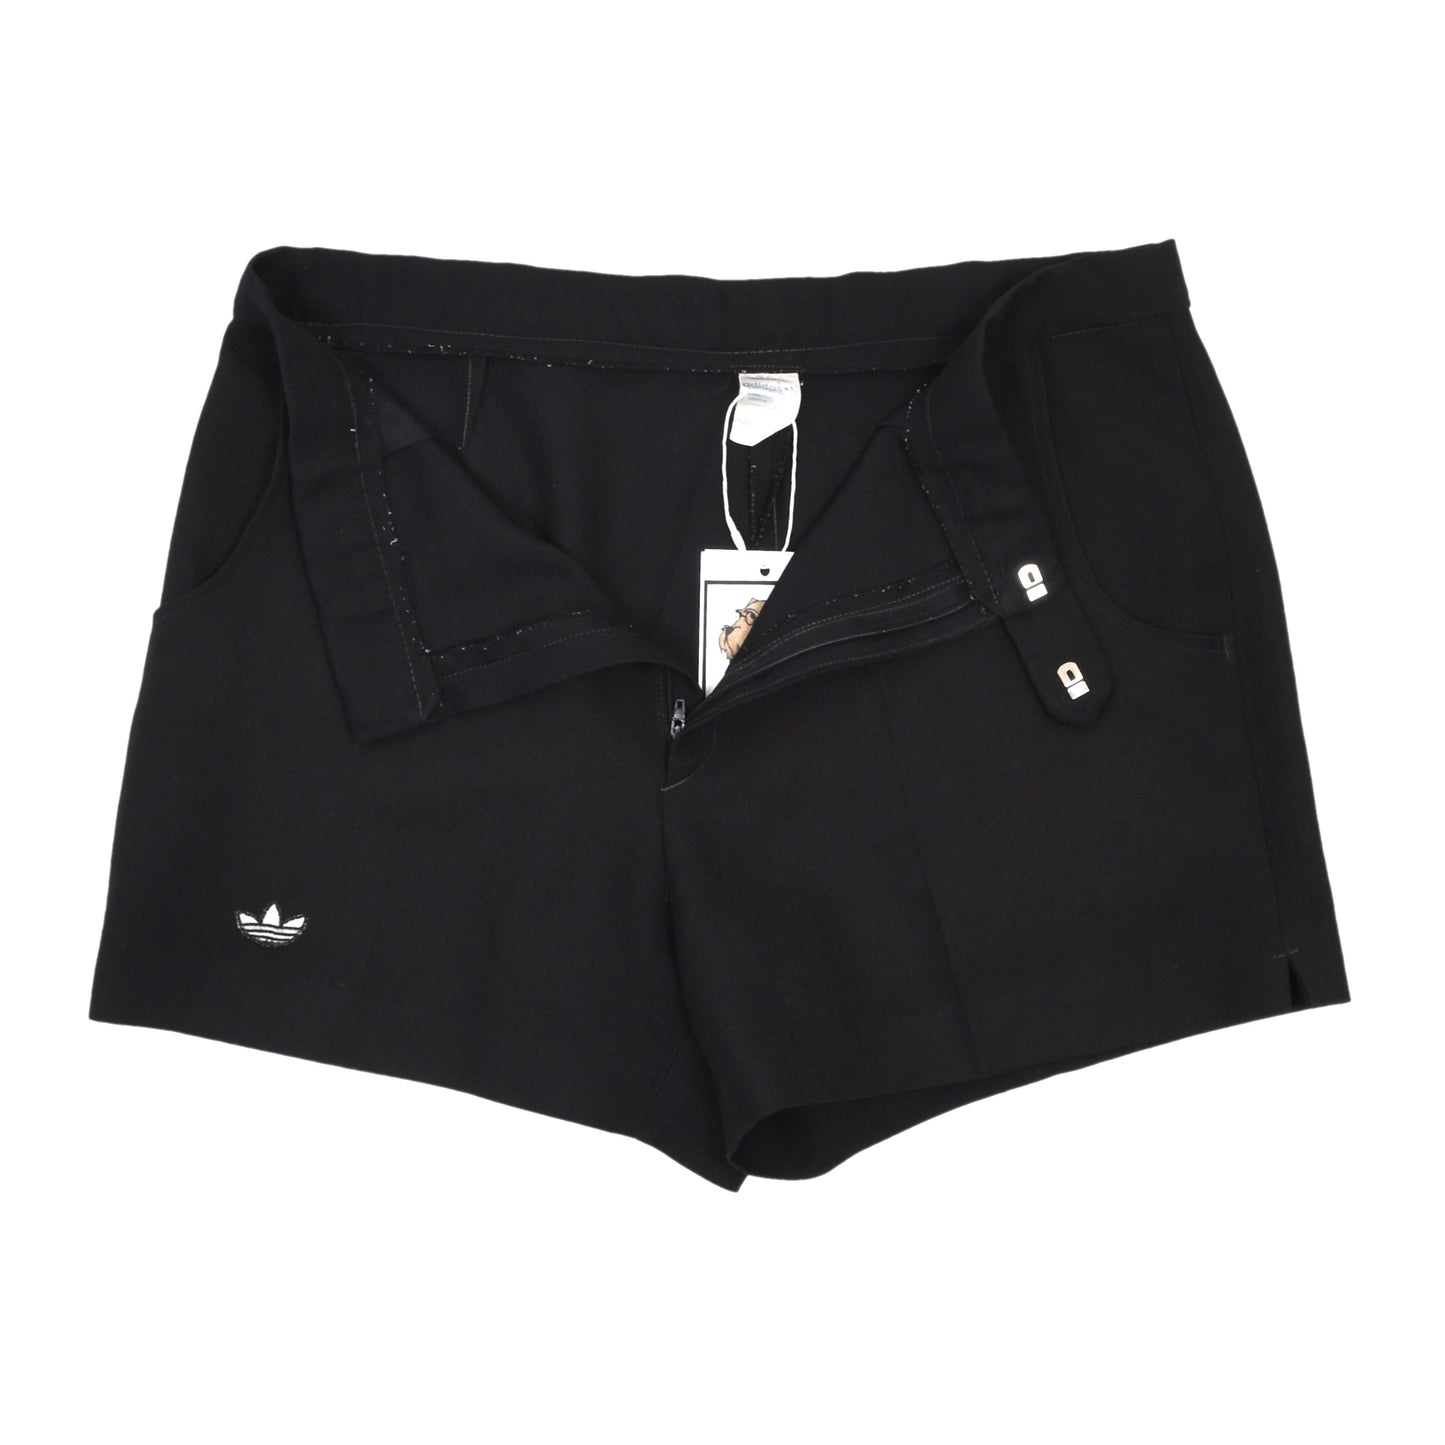 Vintage Adidas Ventex Shorts - Schwarz